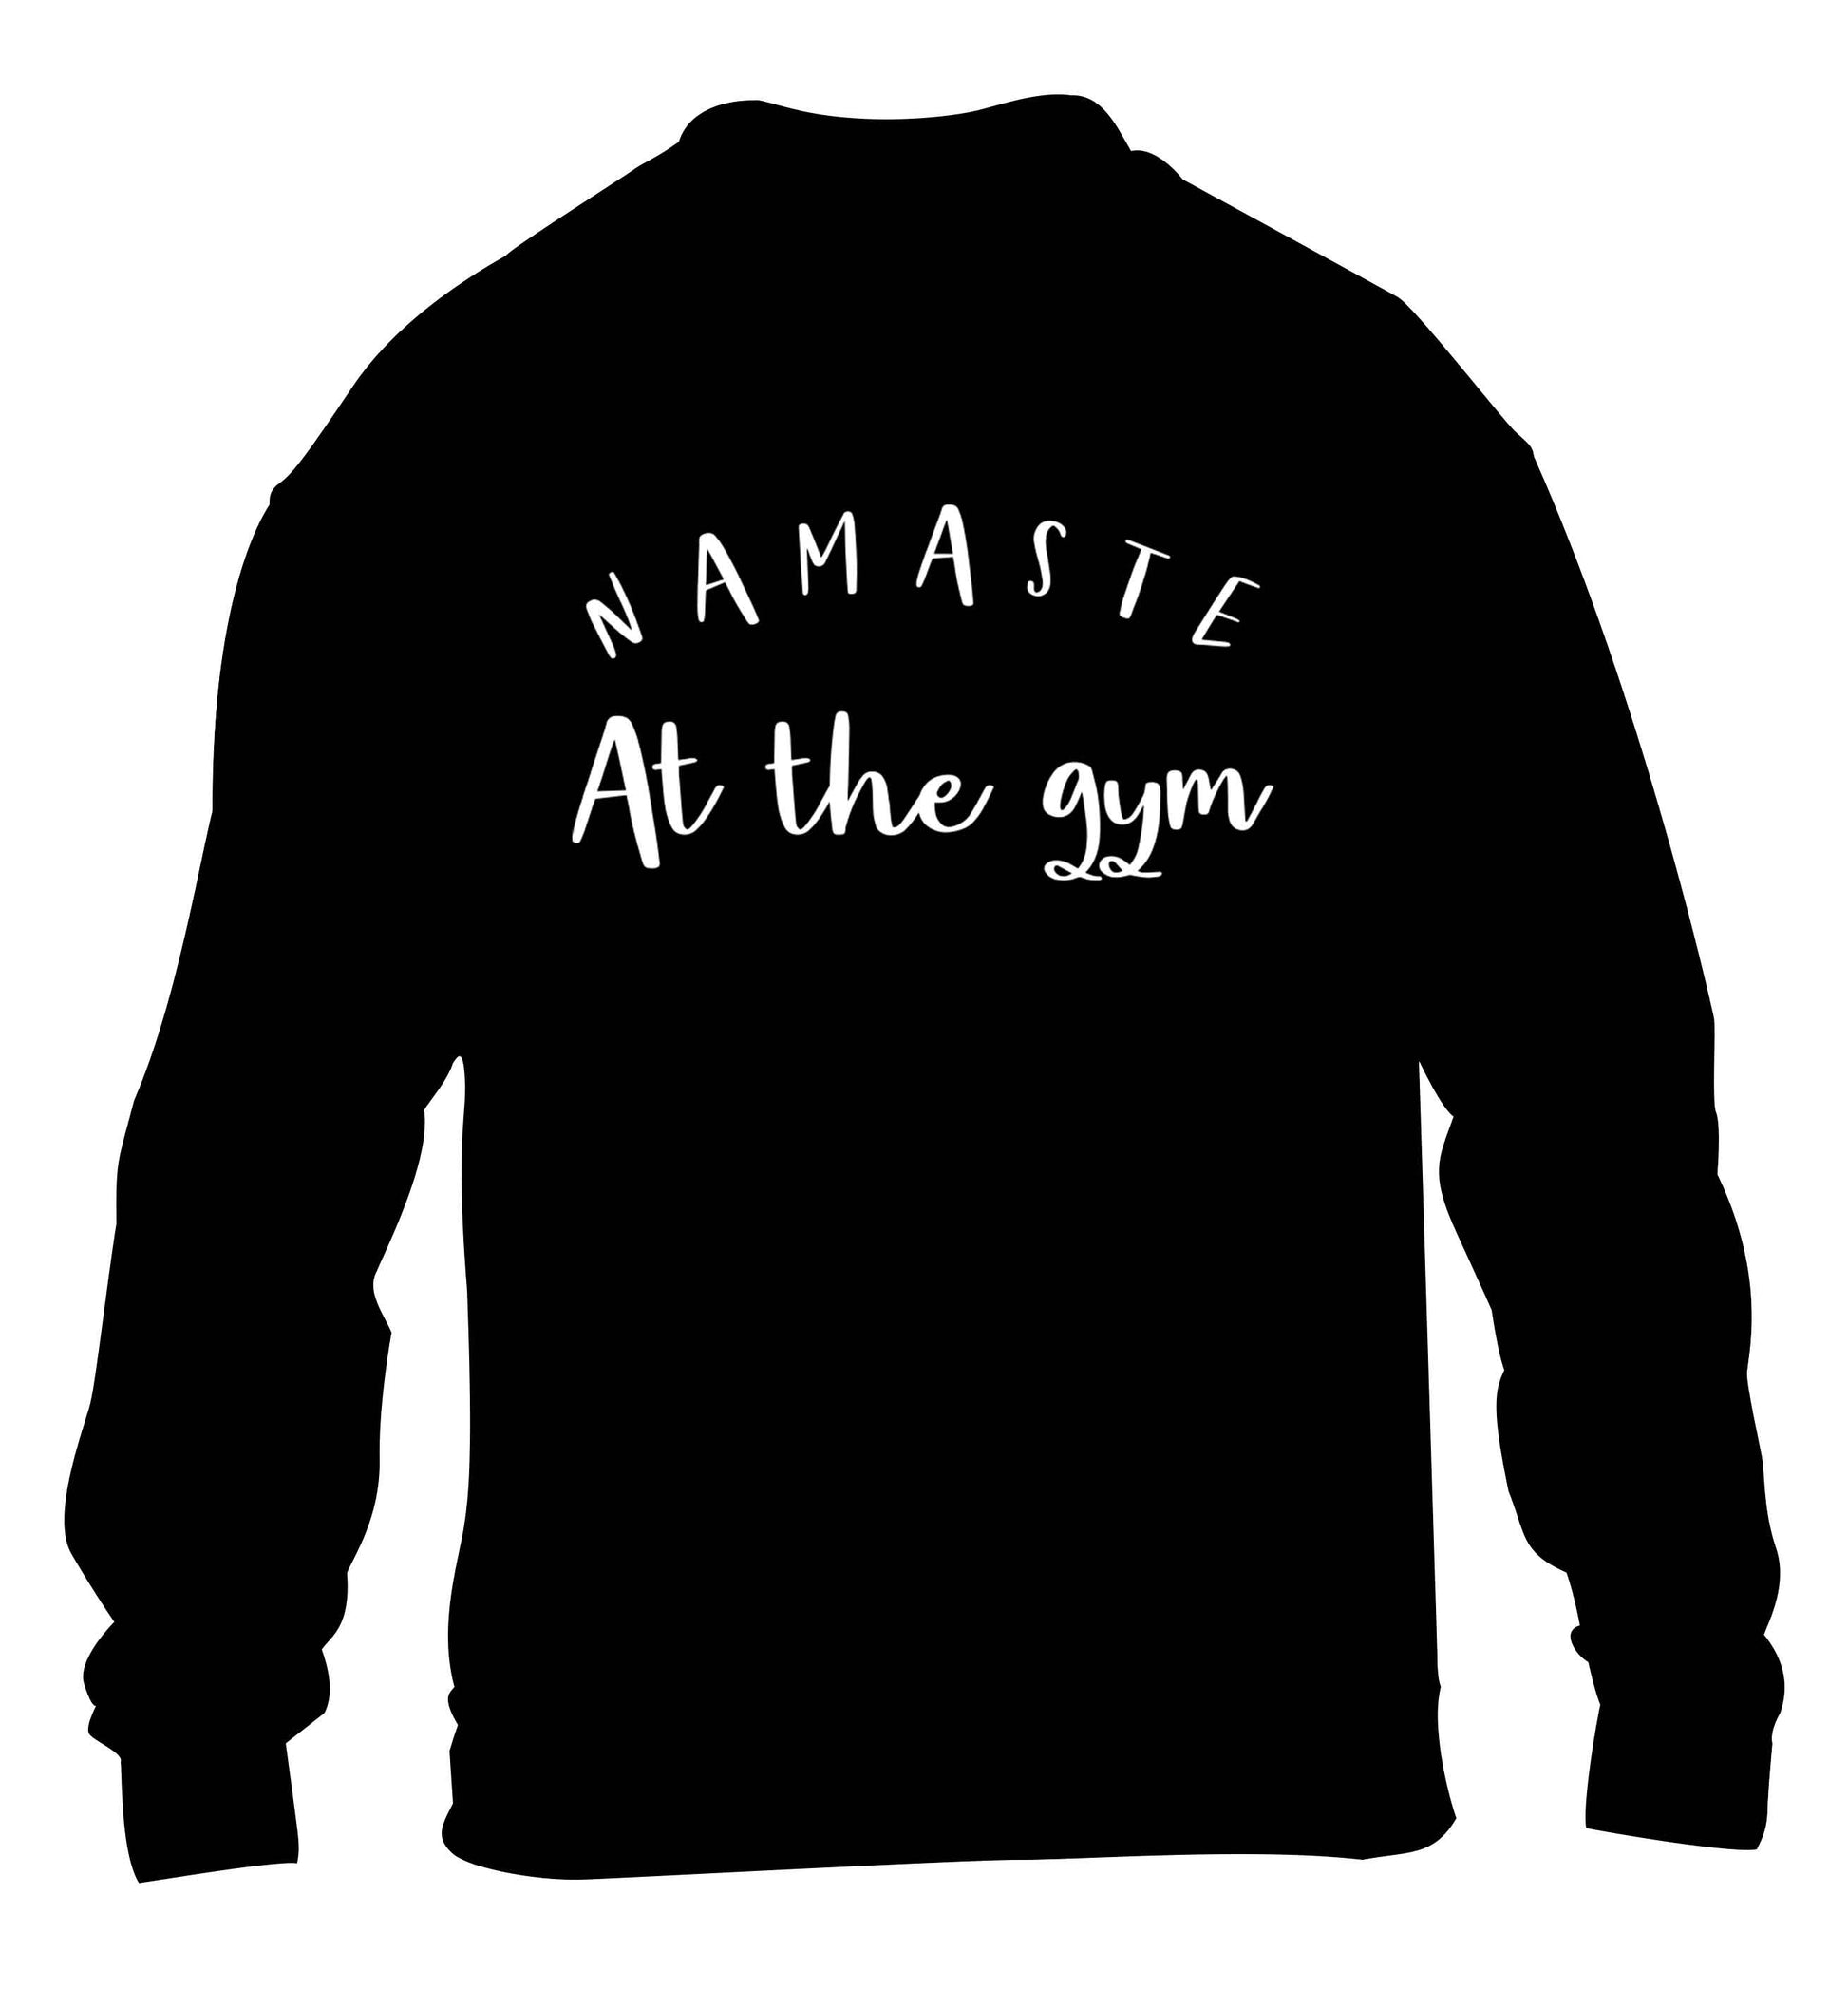 Namaste at the gym children's black sweater 12-13 Years